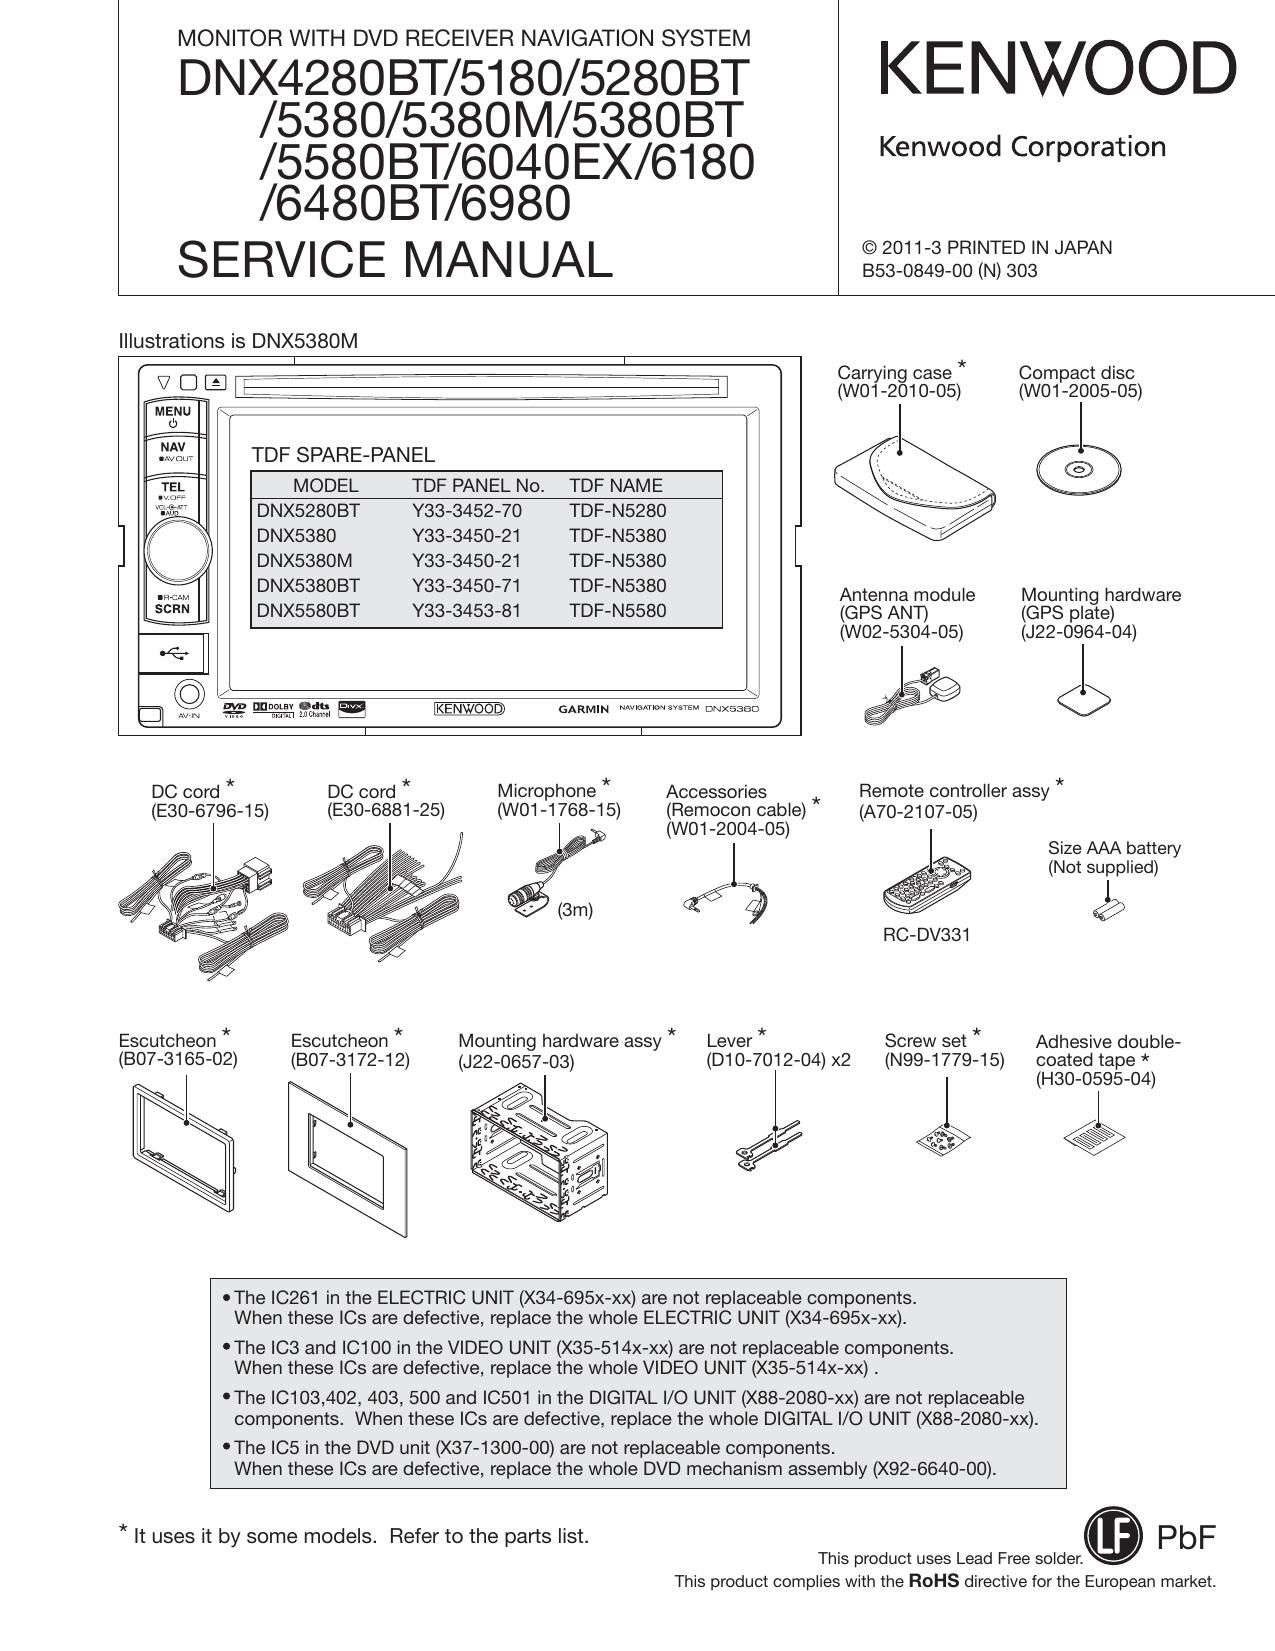 Kenwood DNX 5280 BT Service Manual